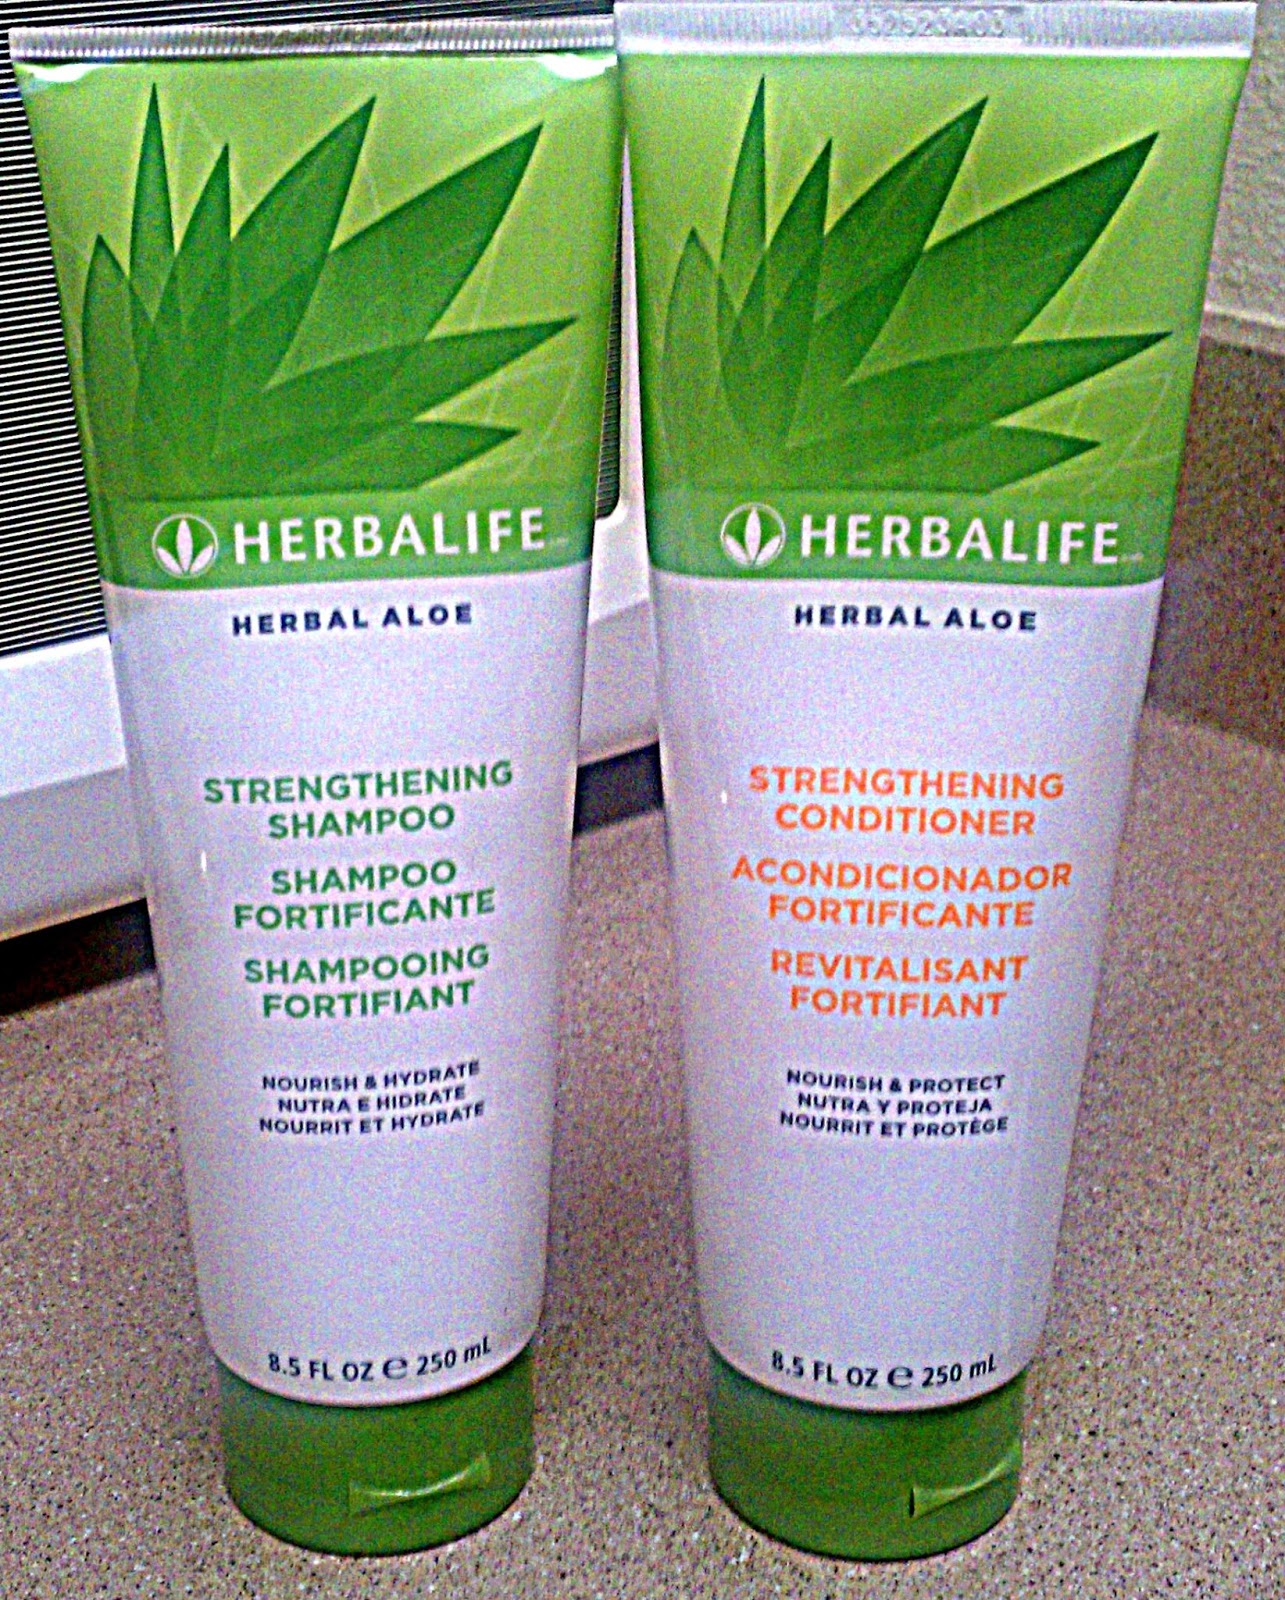 Herbalife Herbal Aloe Strengthening Shampoo & Conditioner Review | FabEllis